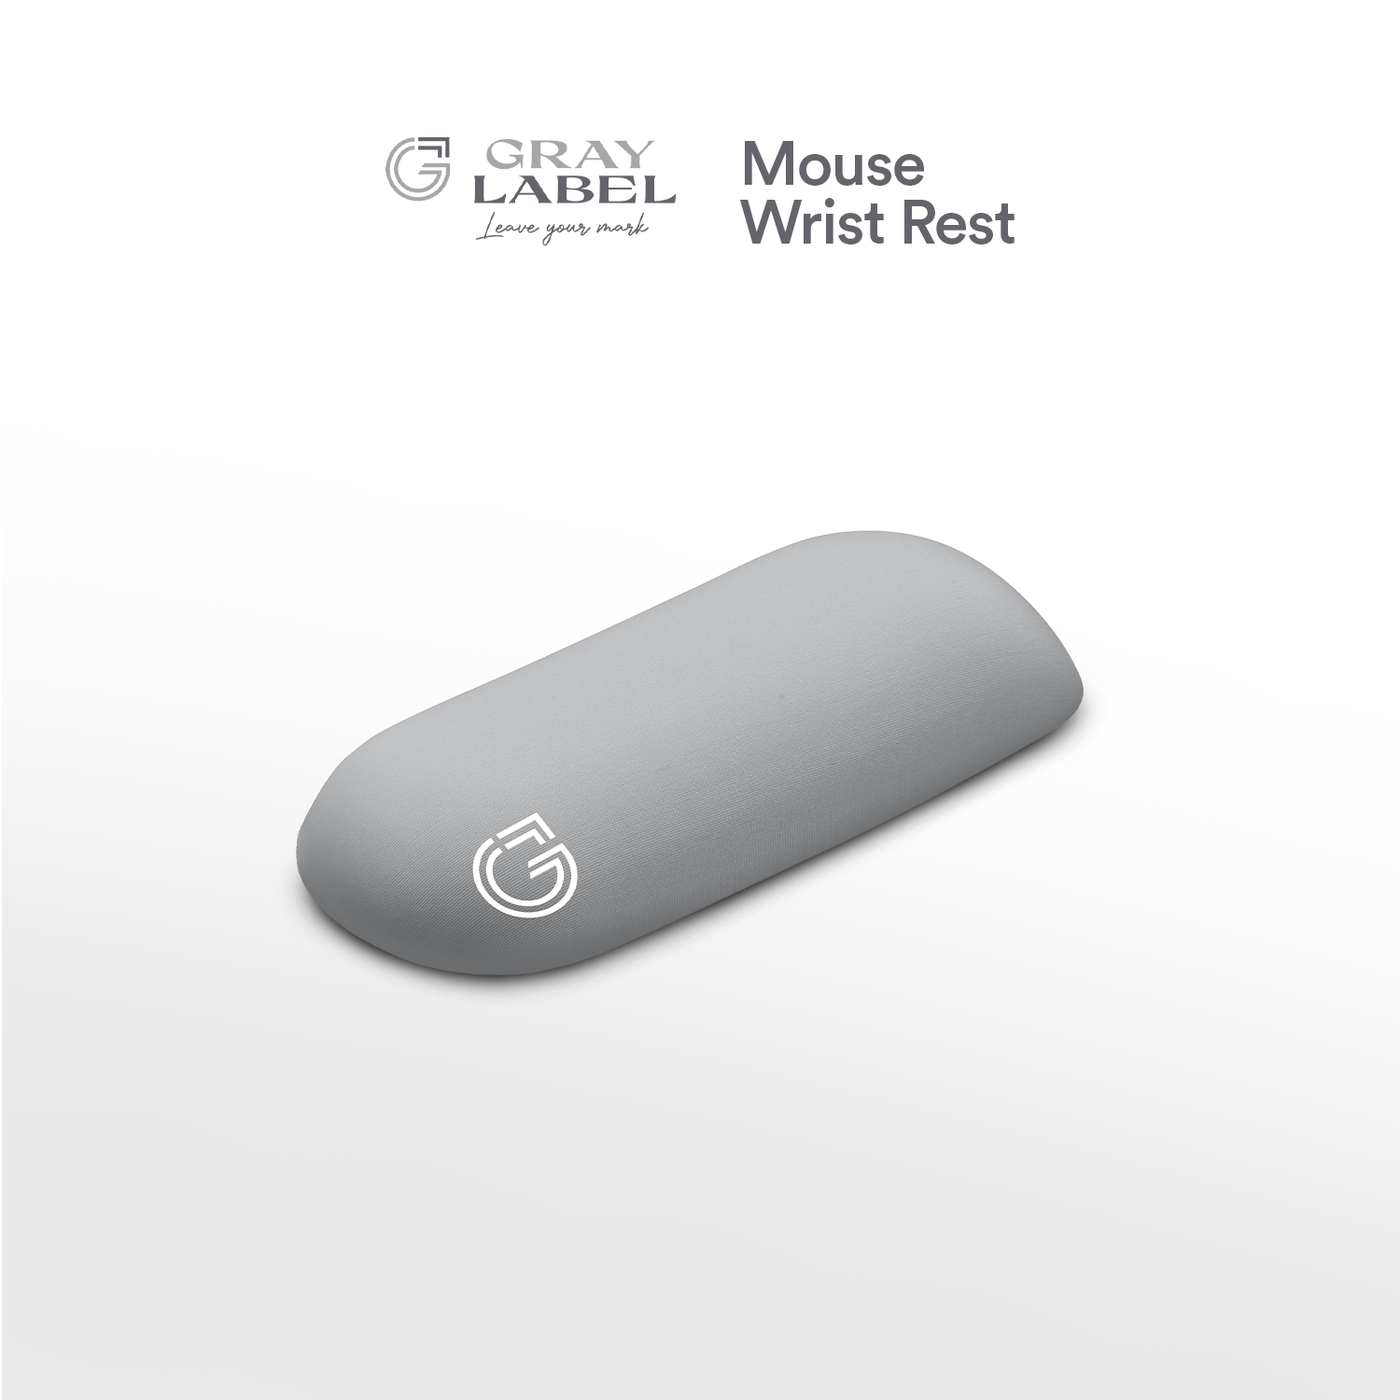 GRAY LABEL Premium Mouse Wrist Rest Memory Foam